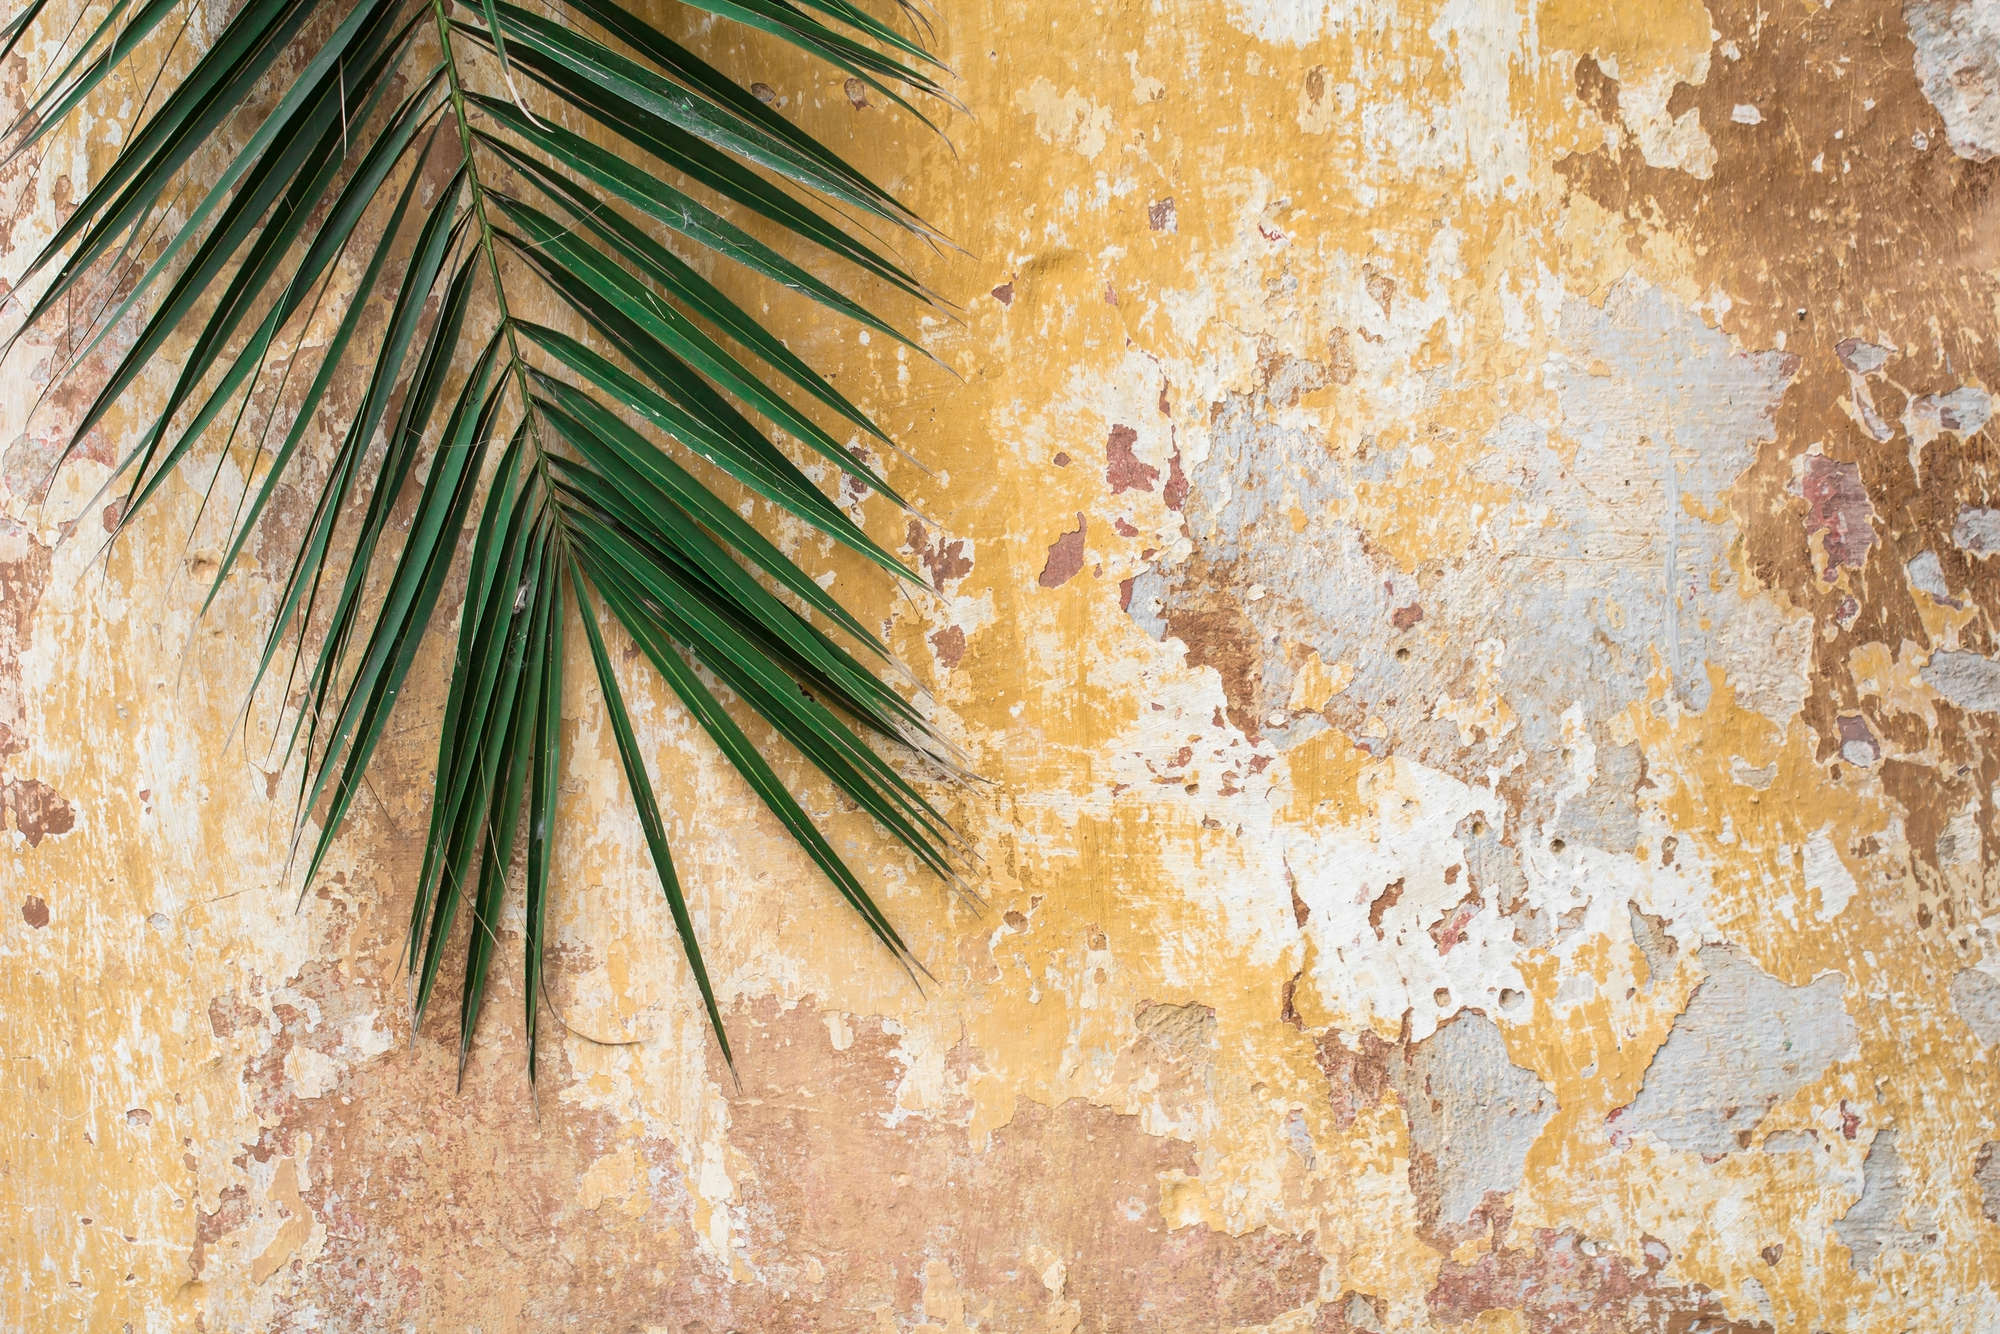             Papel pintado de naturaleza Hoja de palma frente a la pared de piedra sobre vellón liso de primera calidad
        